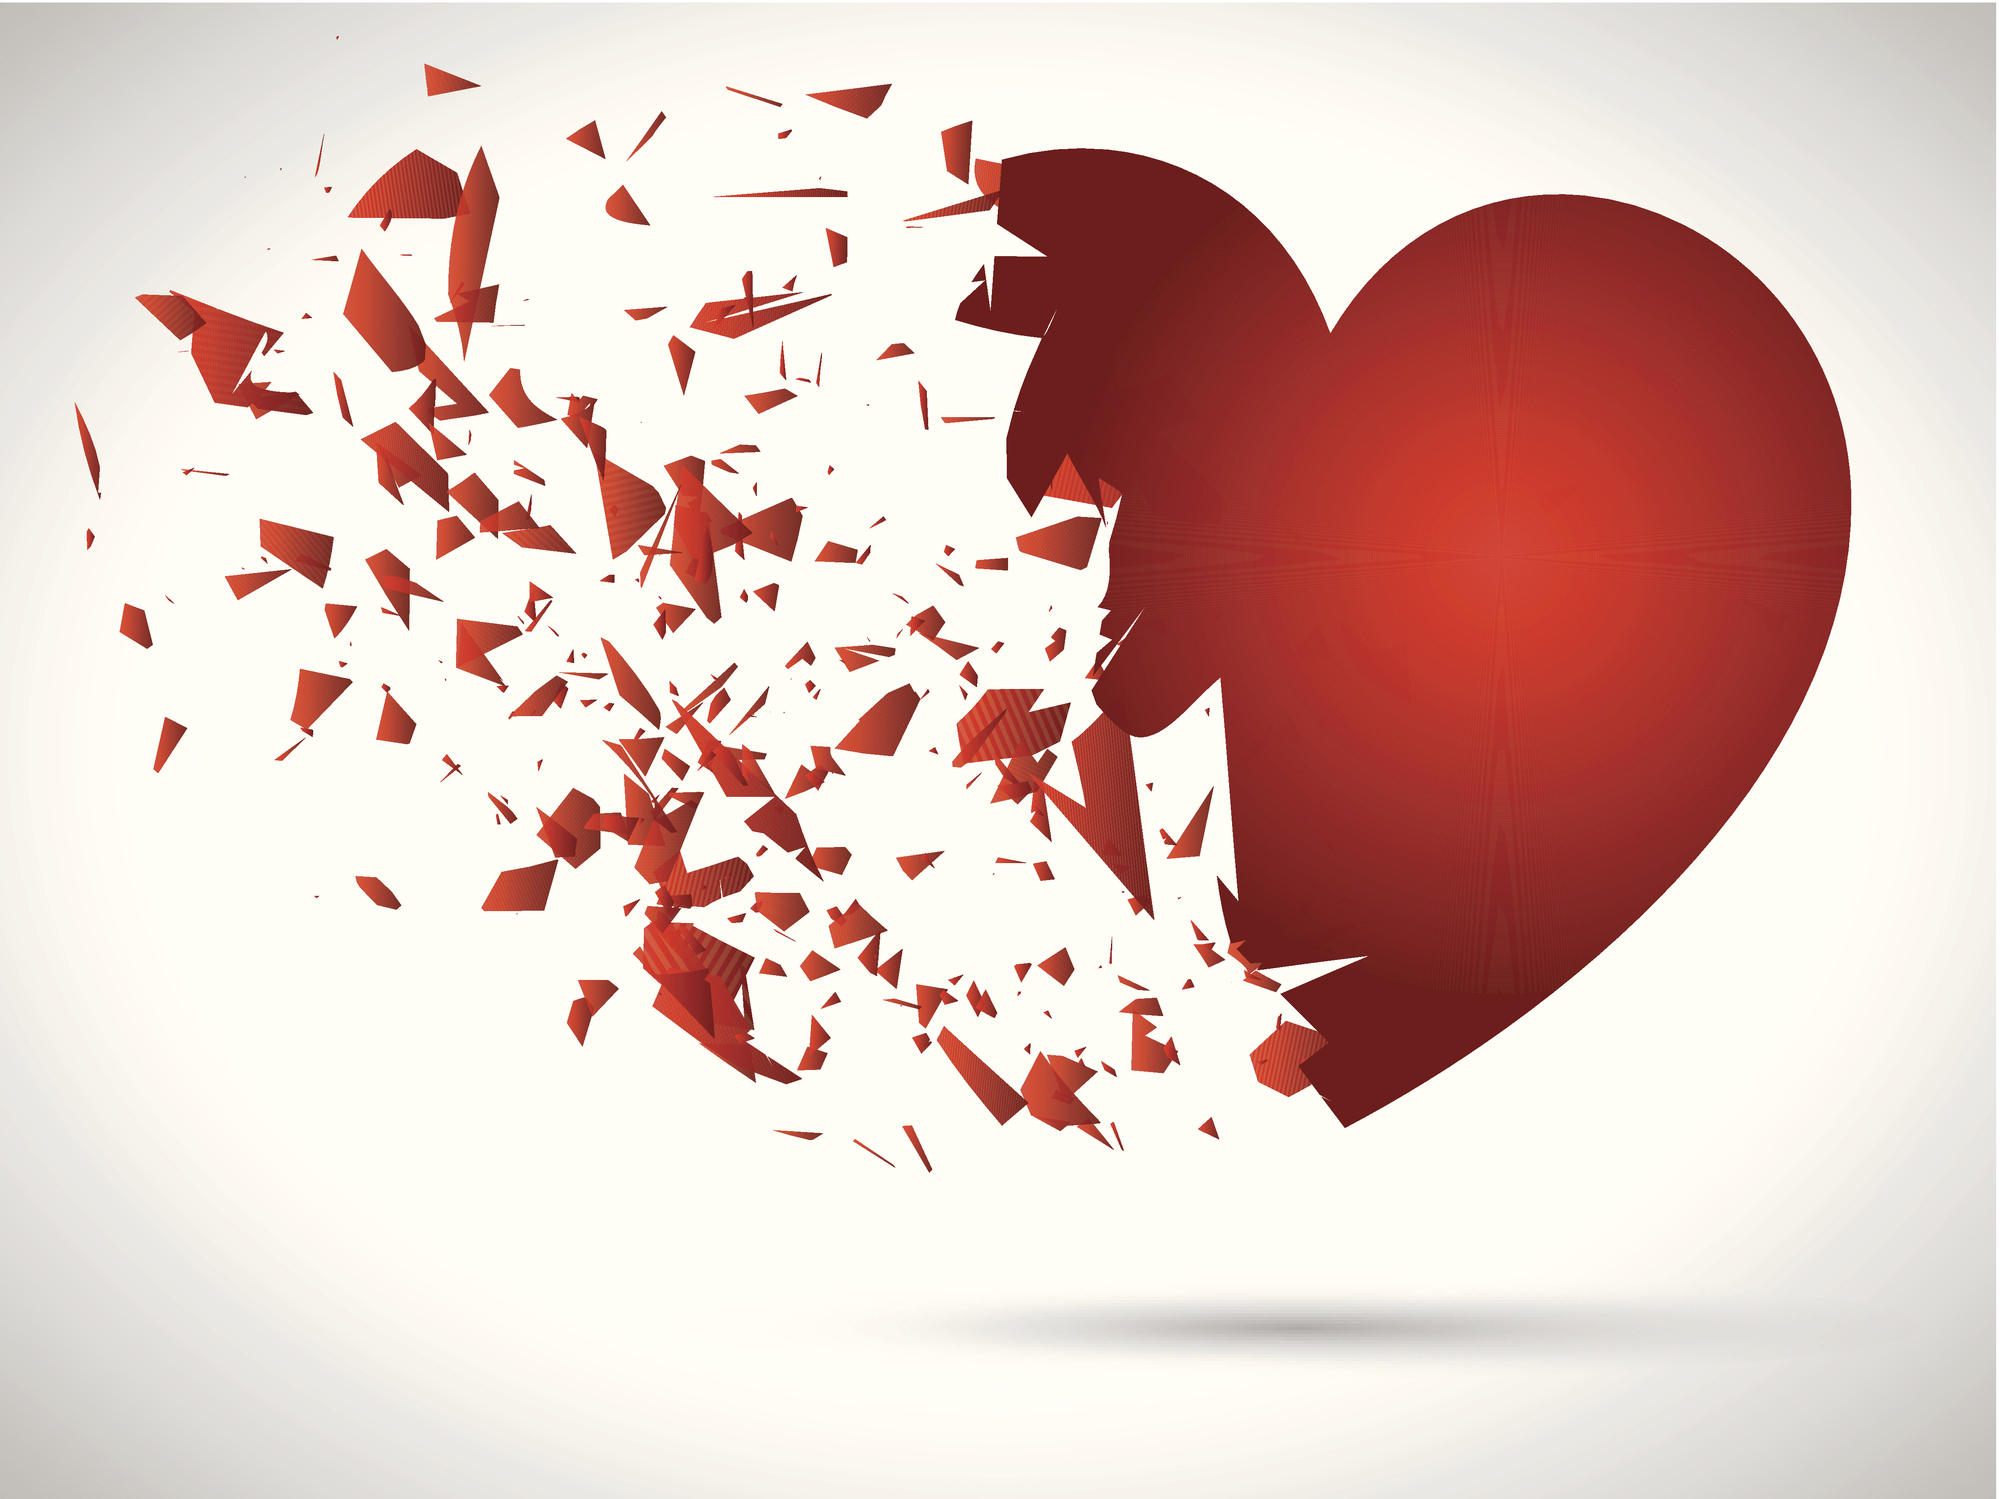 Broken heart syndrome mimicking ...